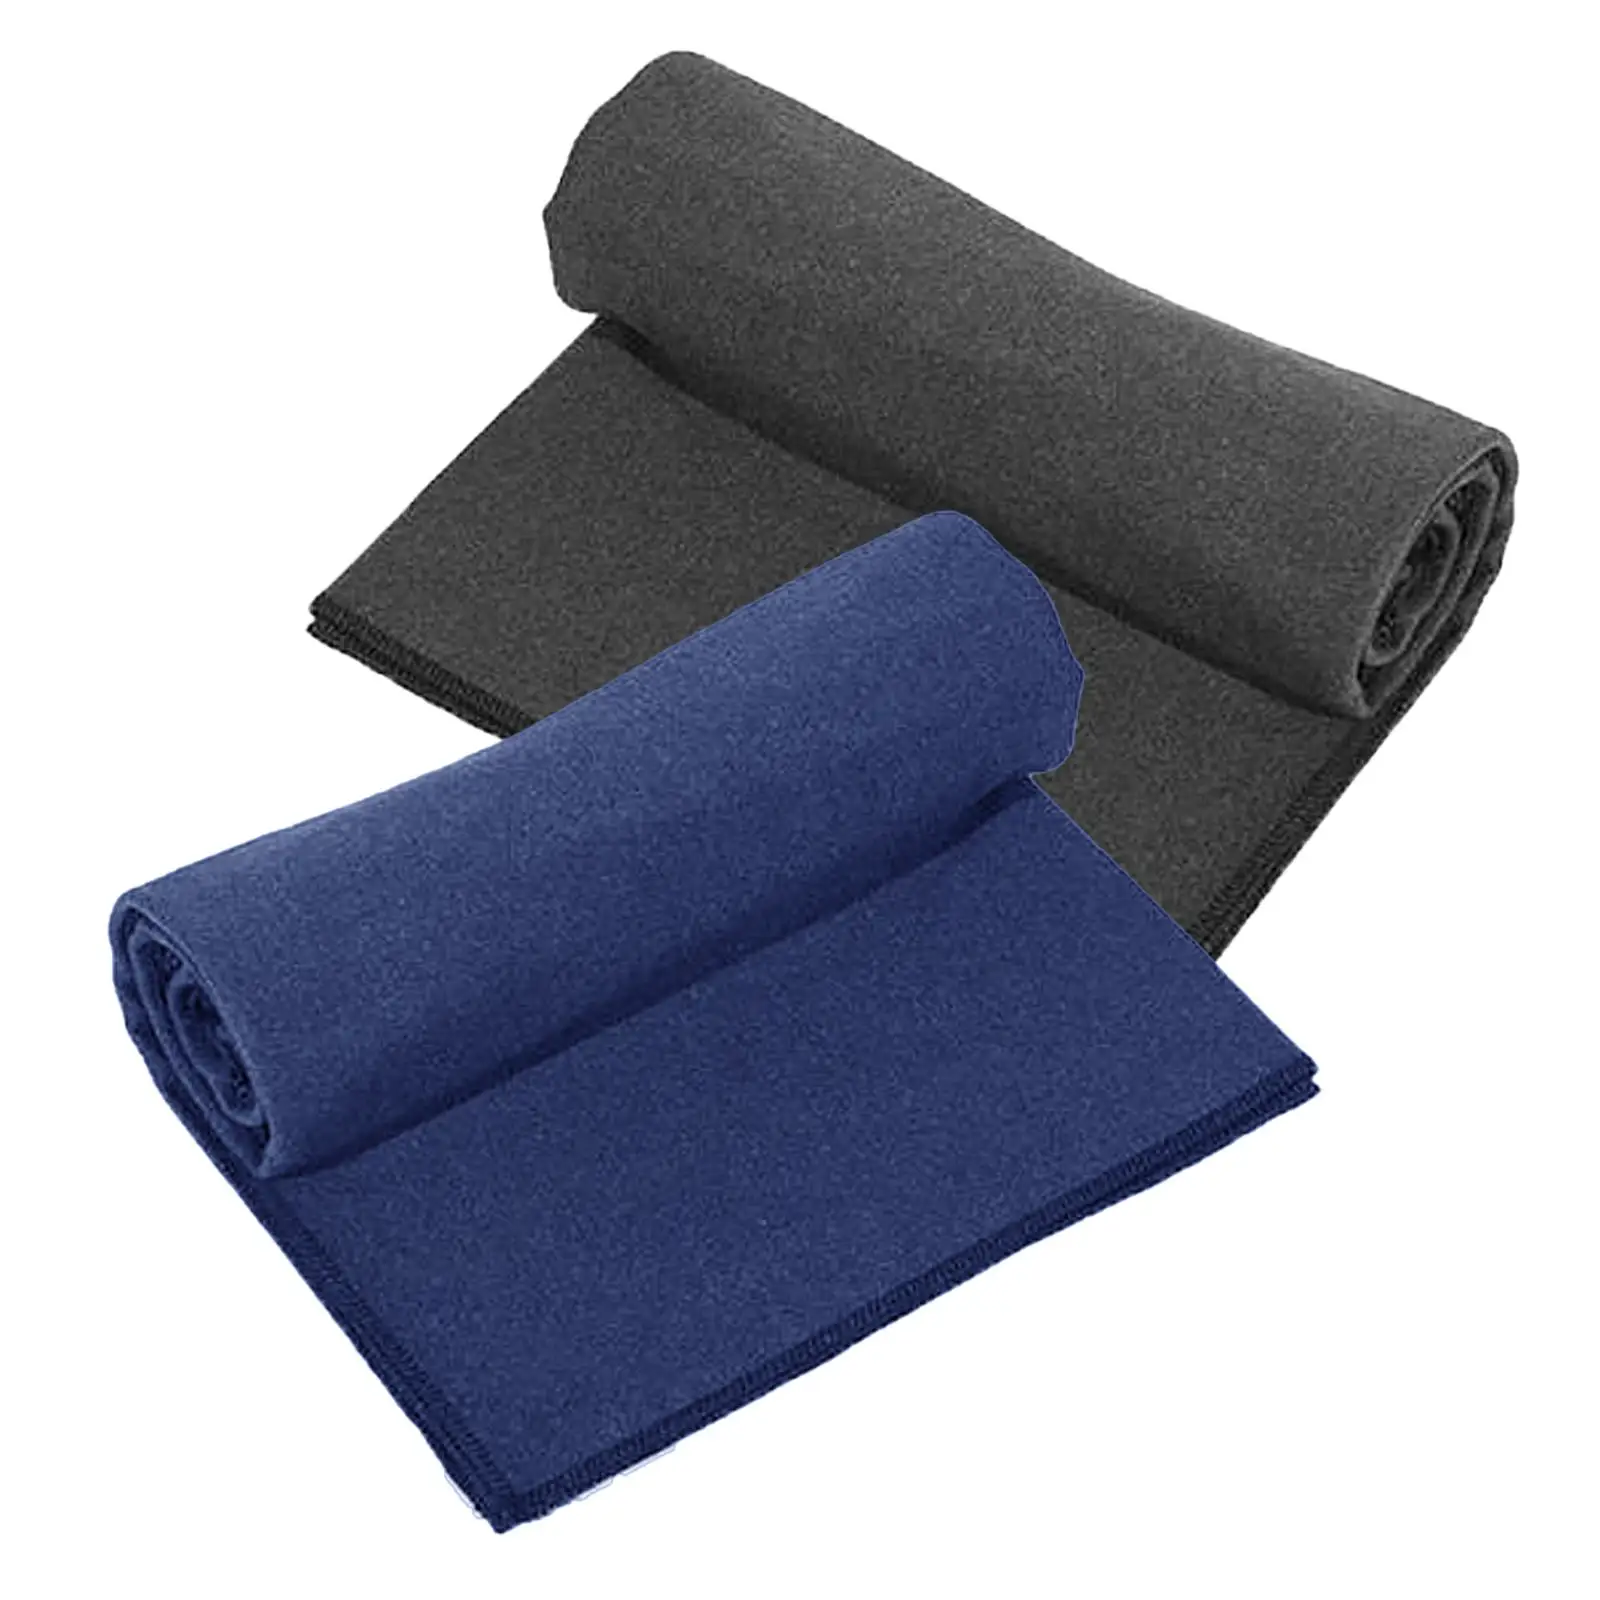 200x150cm Folded Yoga Mat Towel Soft Sweat Absorbent Comfortable Travel Camping Blanket